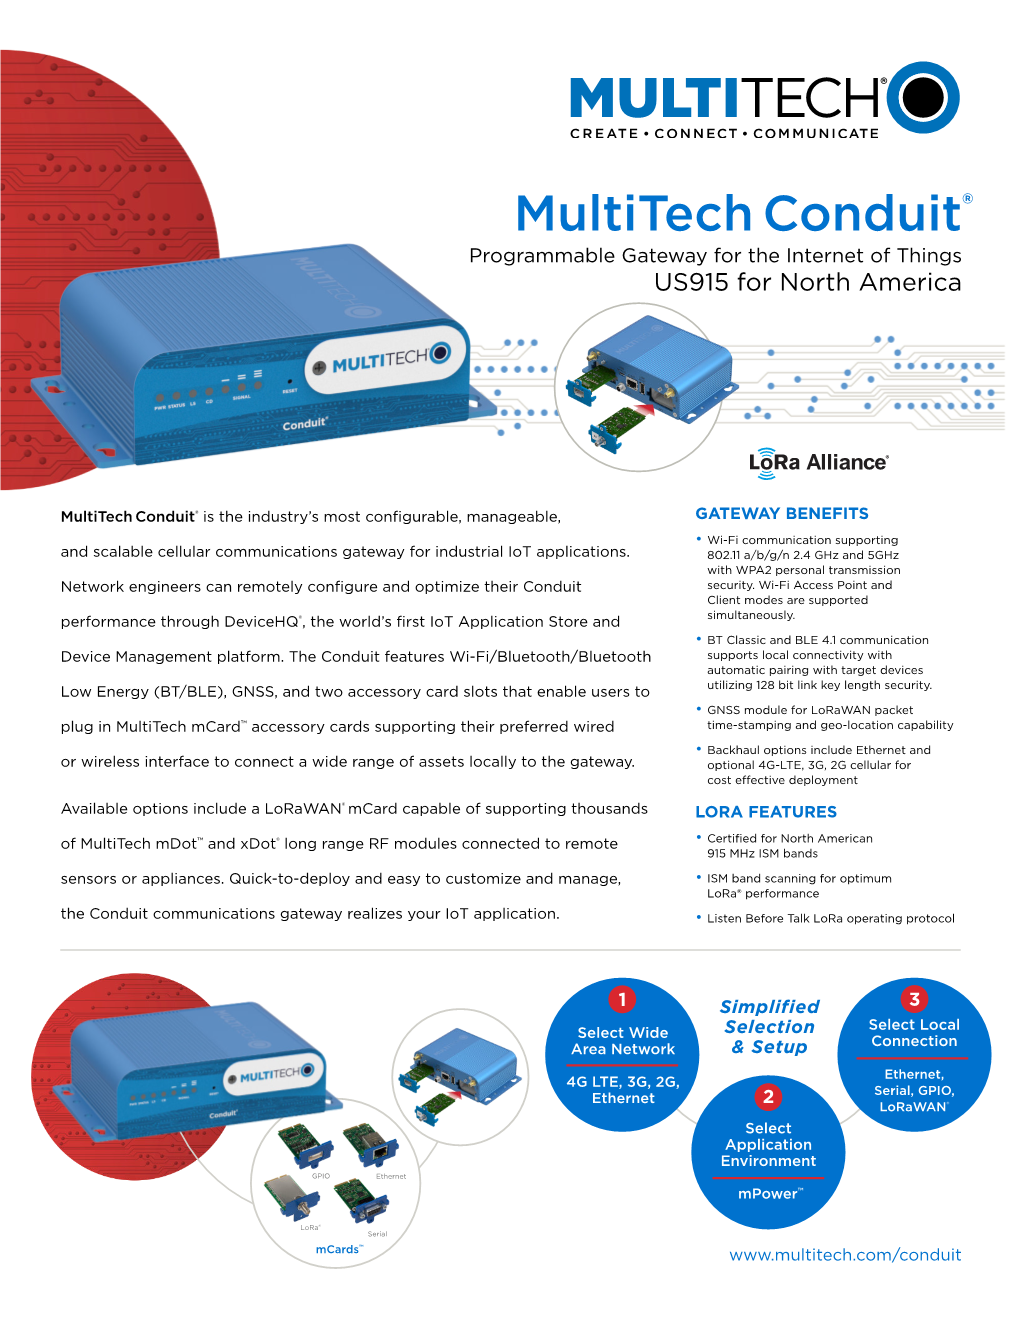 Multitech Conduit®: Programmable Gateways